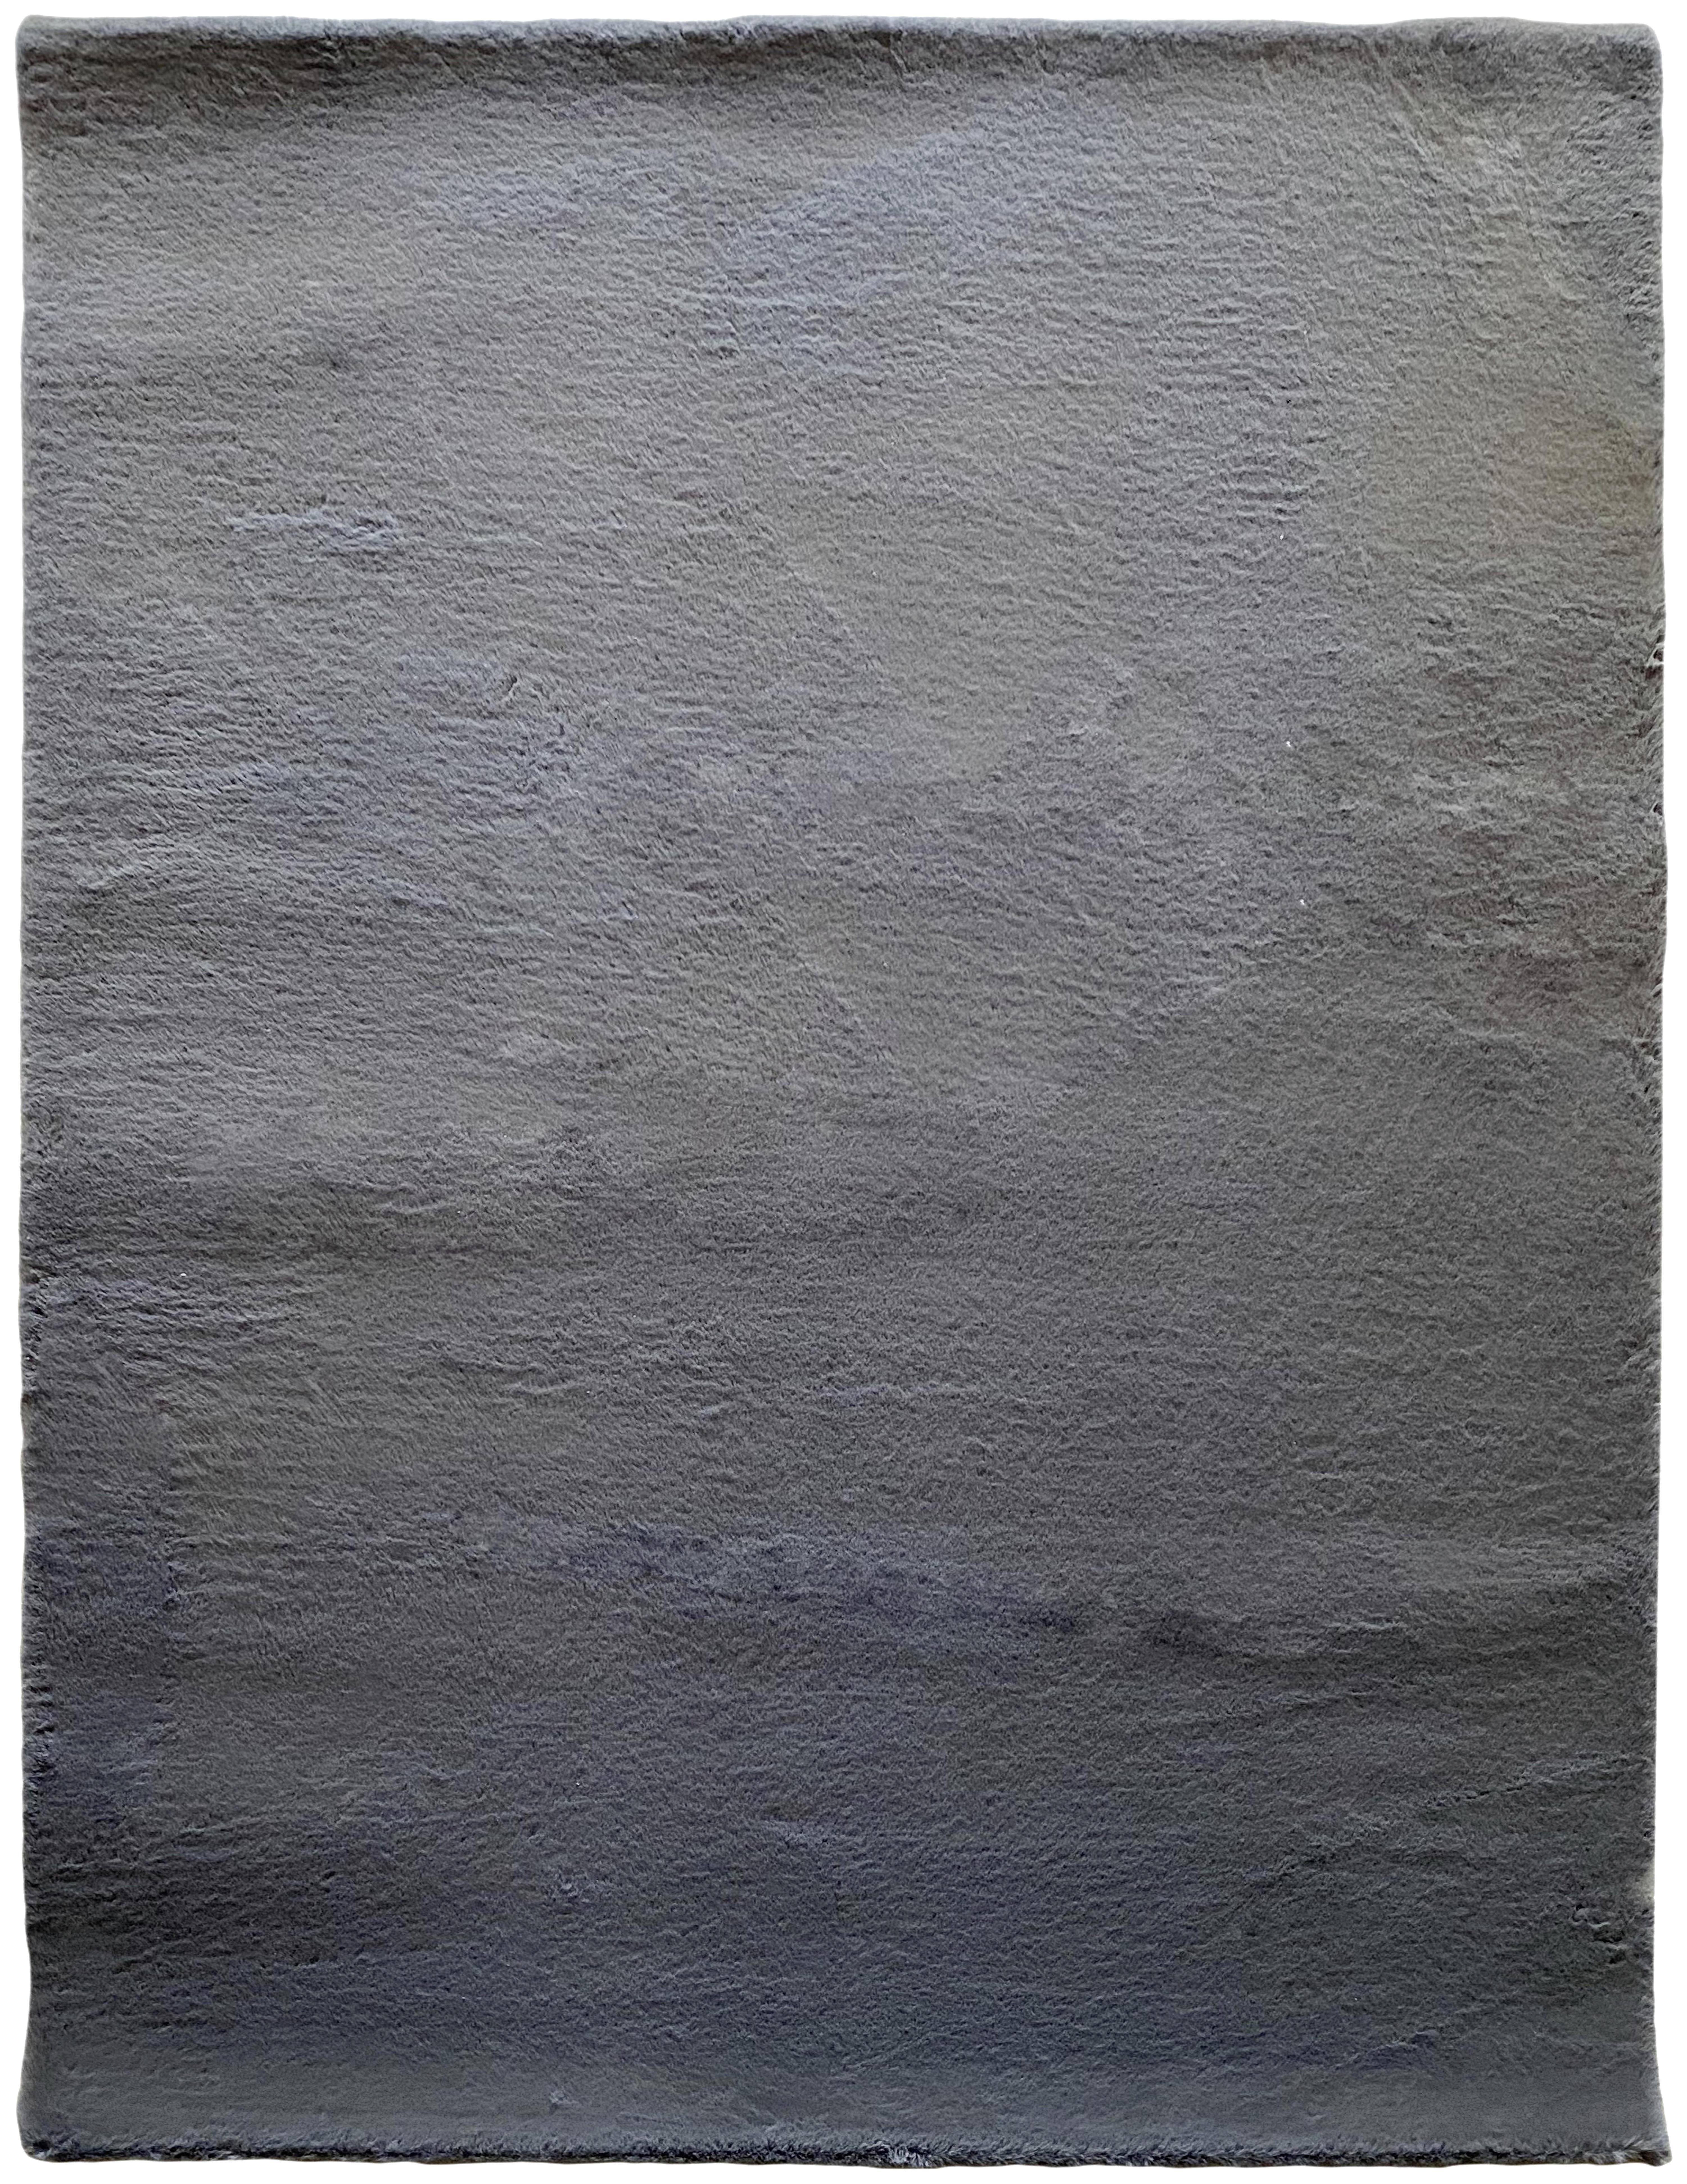 Fellteppich Stahlgrau Magarete 120x160 cm - Dunkelgrau, Textil (120/160cm) - Luca Bessoni